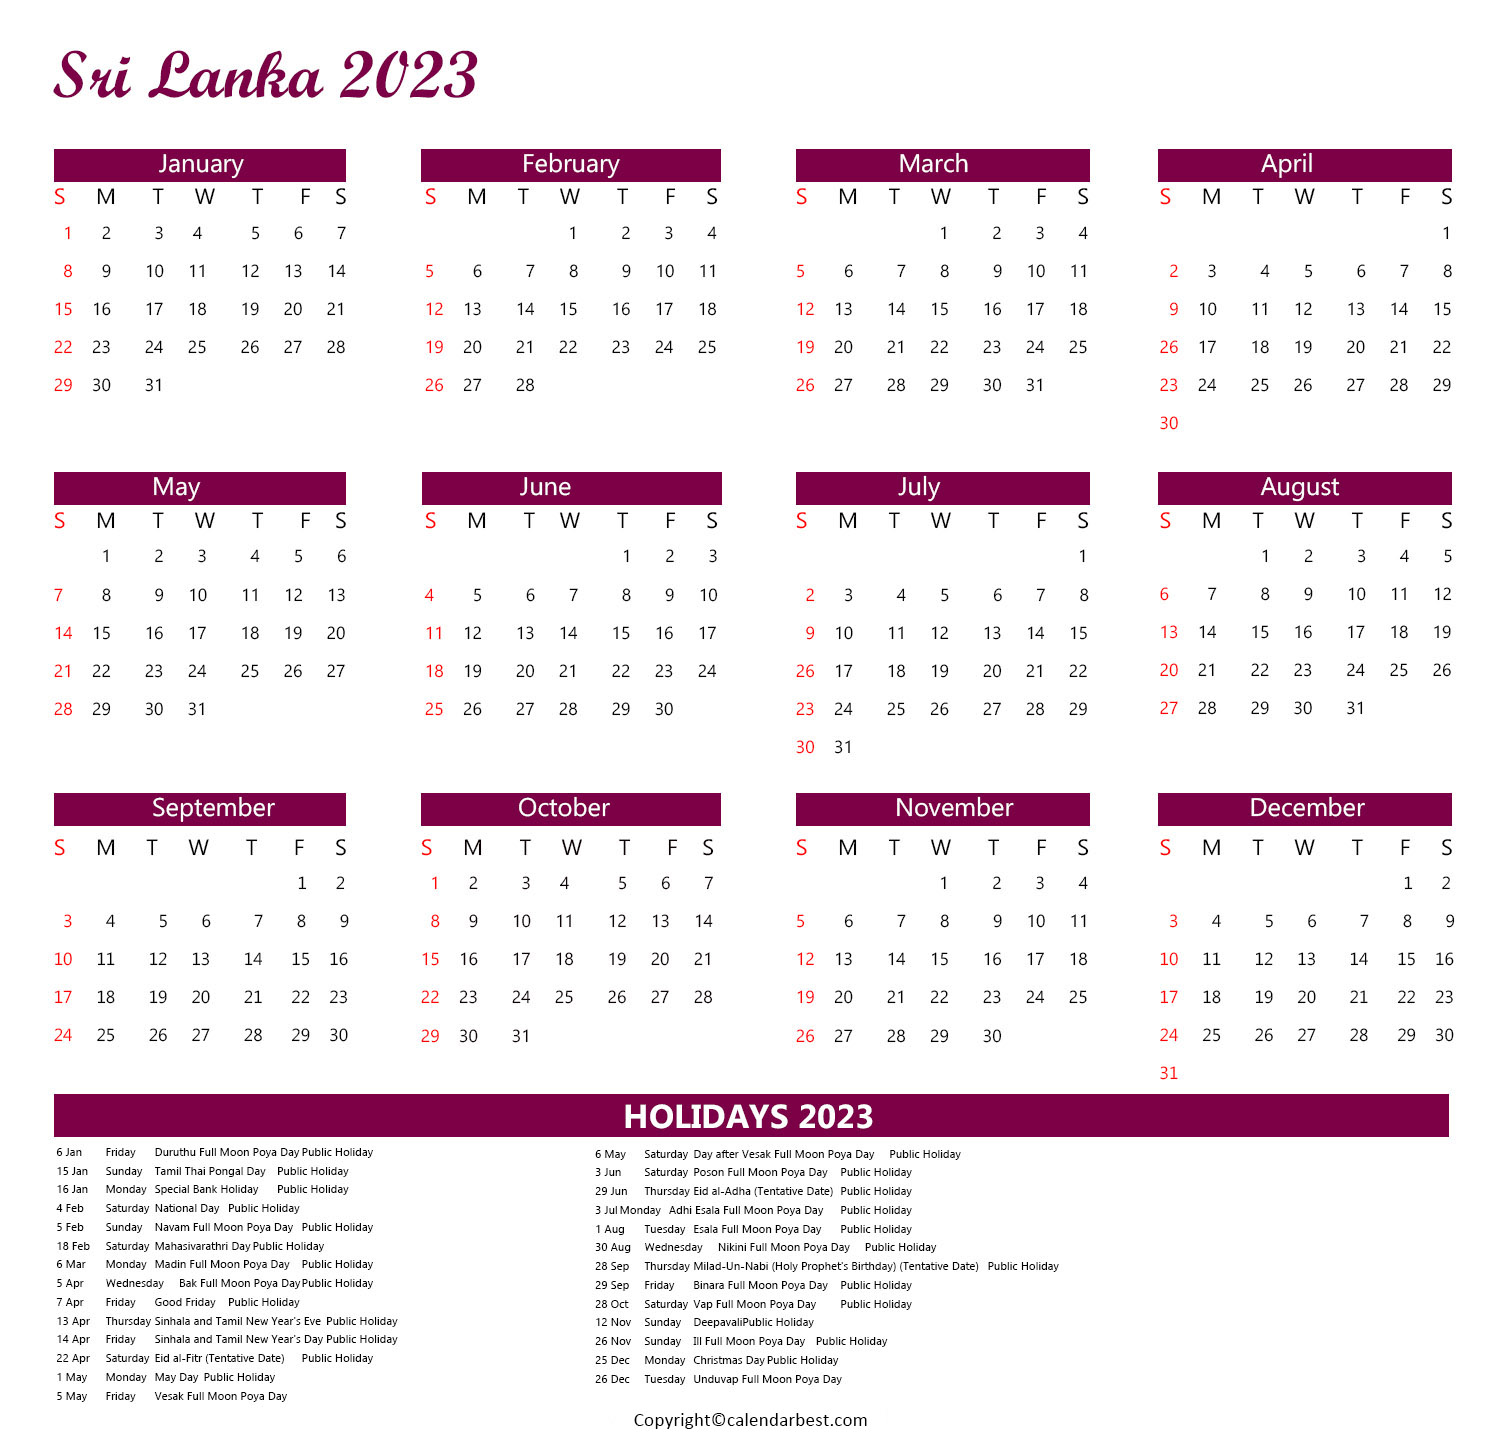 Sri Lanka Calendar 2023 with Holidays